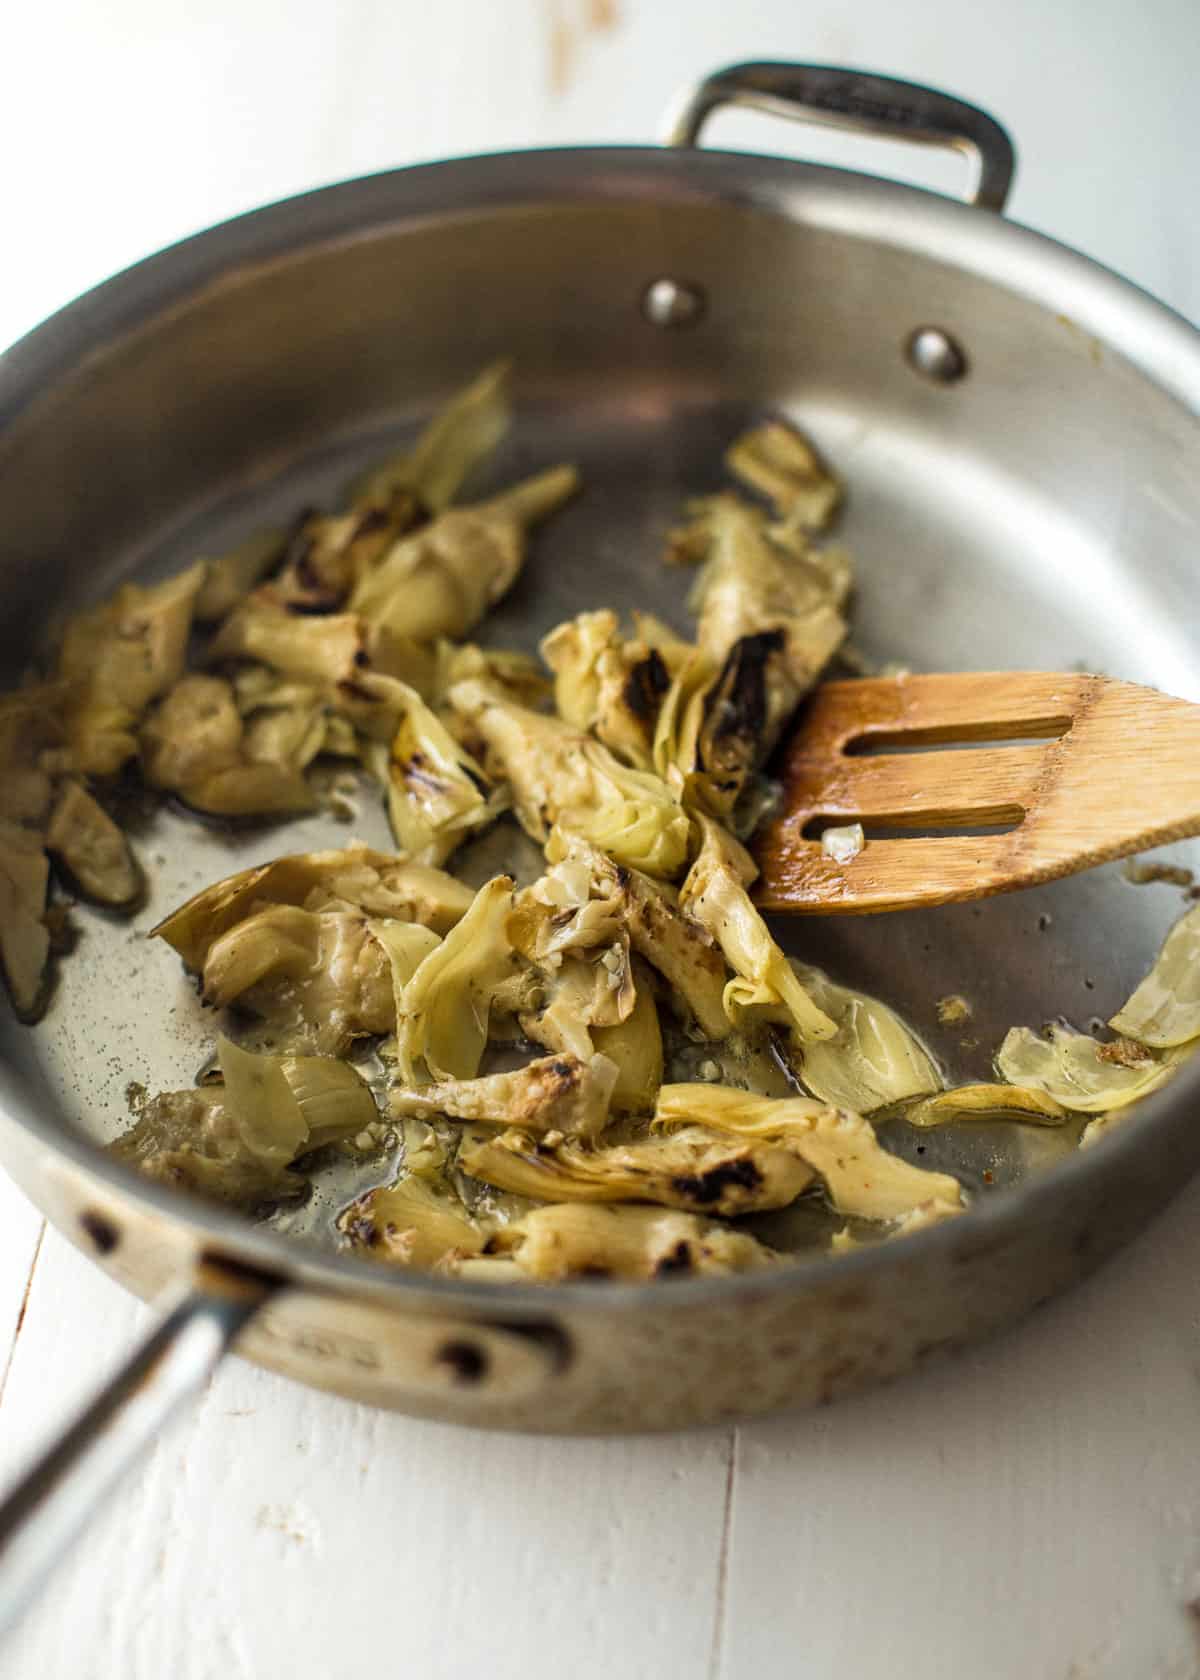 cooking artichoke hearts in a skillet